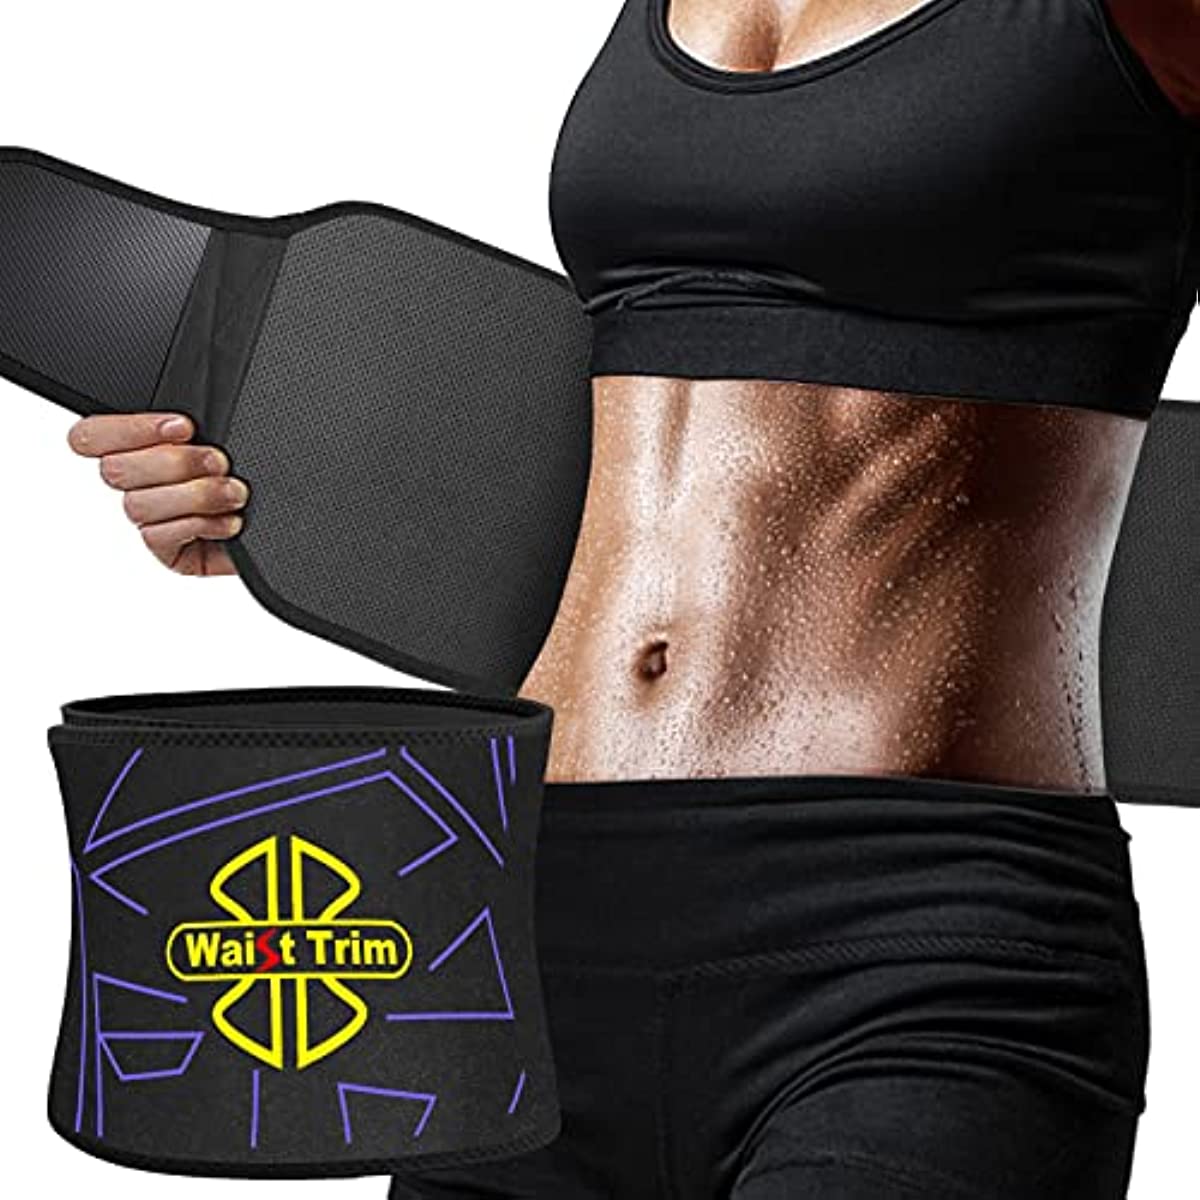 Fovbun Waist Trainer for Women & Men, Sweat Belt for Belly/Back/Lumbar Support, Stretchable Neoprene Sauna Tummy Control Workout Waist Trimmer, 55’’ Long Adjustable Straps, Slimming Body Shaper Black